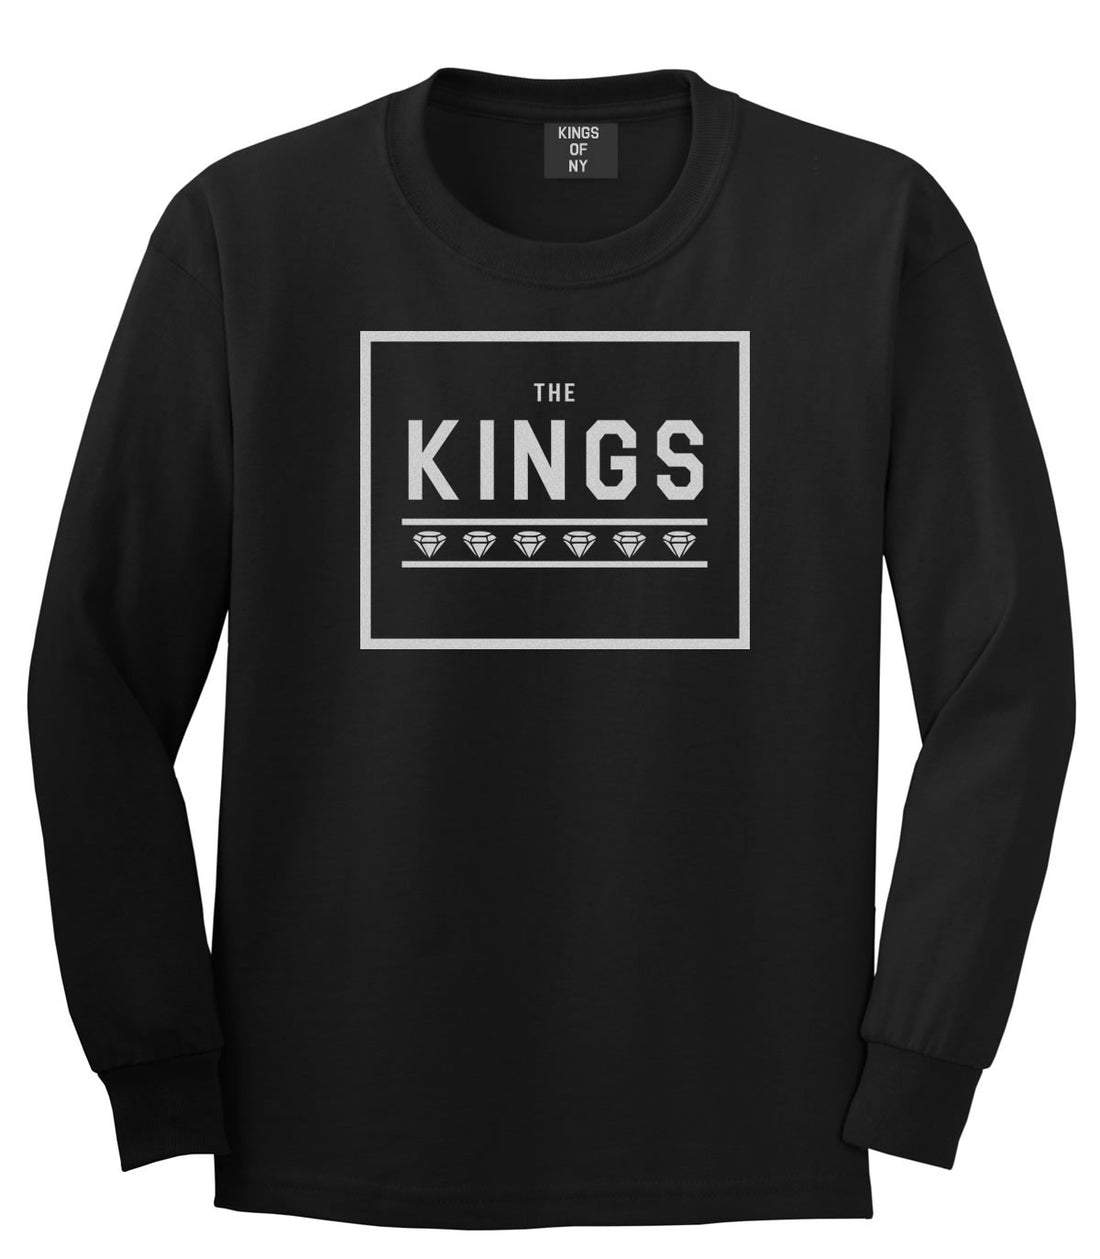 The Kings Diamonds Boys Kids Long Sleeve T-Shirt in Black by Kings Of NY